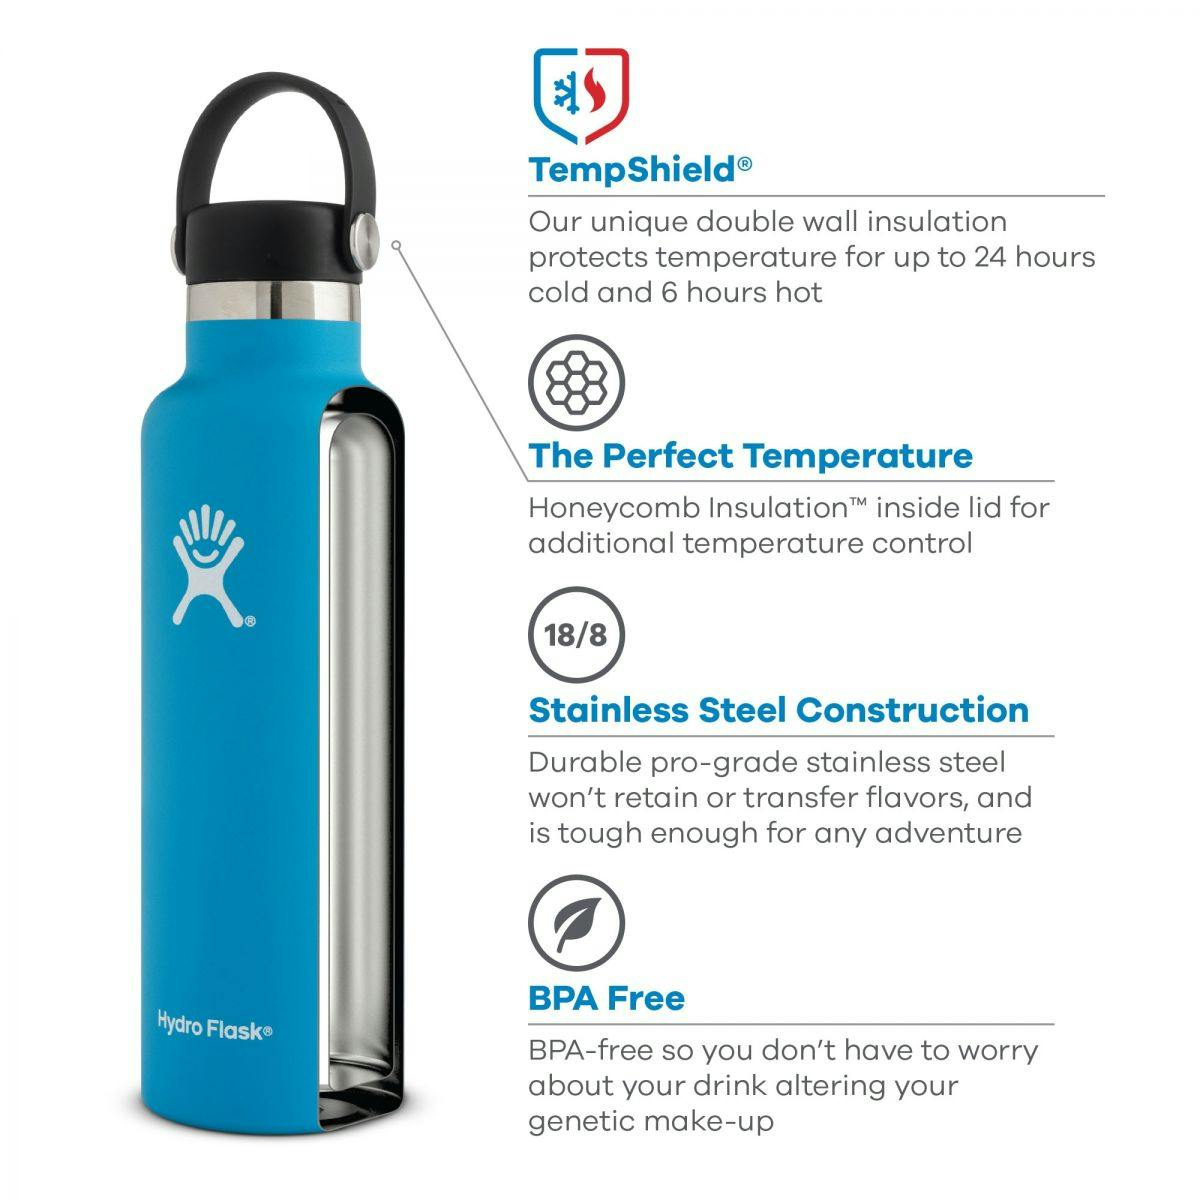 Hydro Flask 18 oz Standard Mouth Bottle · Laguna